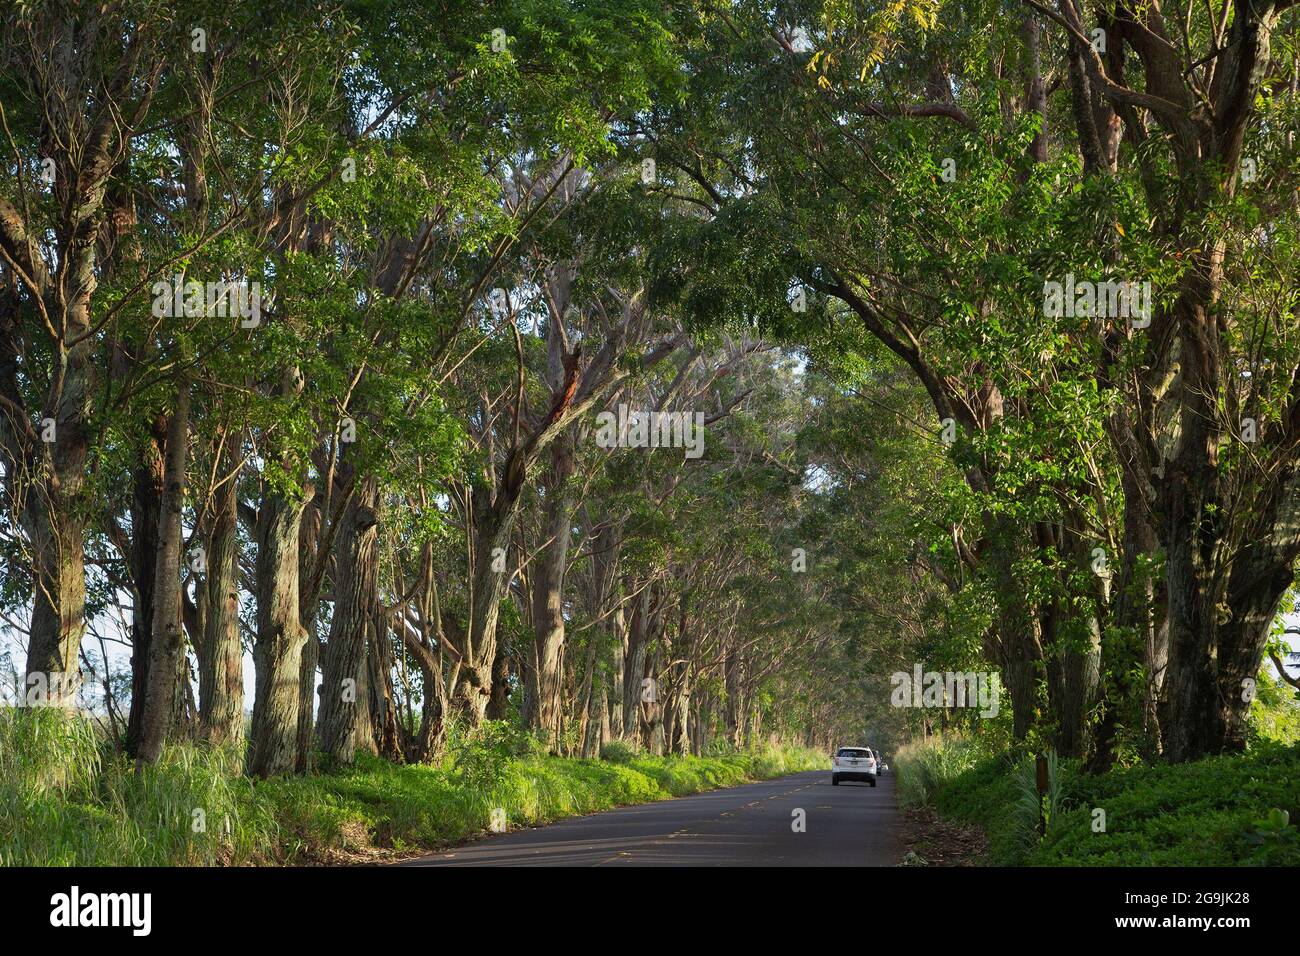 The tunnel of trees on Highway 520, the road to Koloa and Poipu in Kauai, Hawaii. The trees are Swamp Mahogany (Eucalyptus robusta) Stock Photo